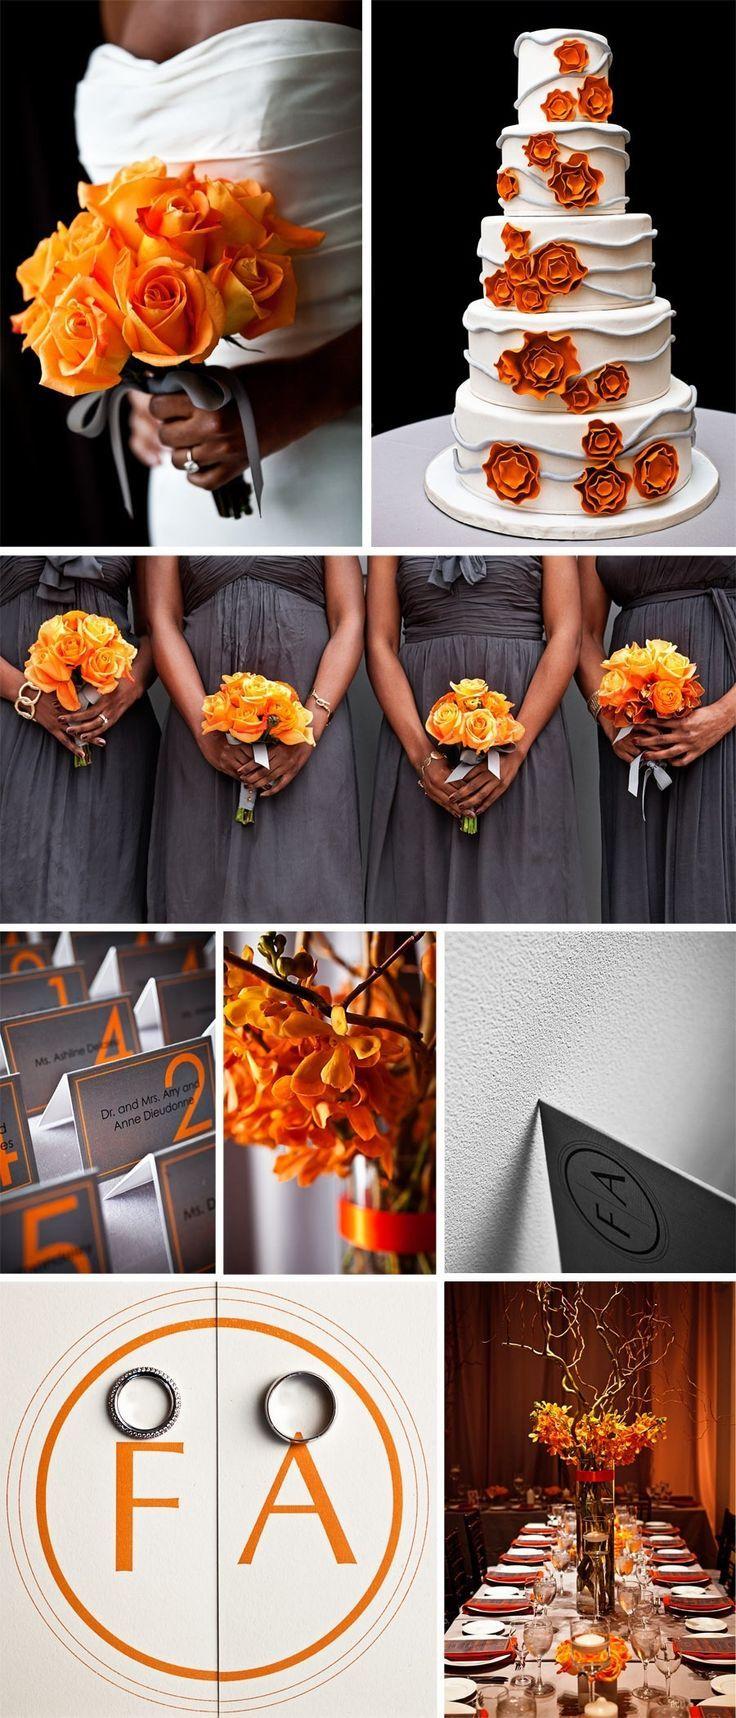 Wedding - Why You Should Consider An Orange Wedding Color - WeddingDash.com